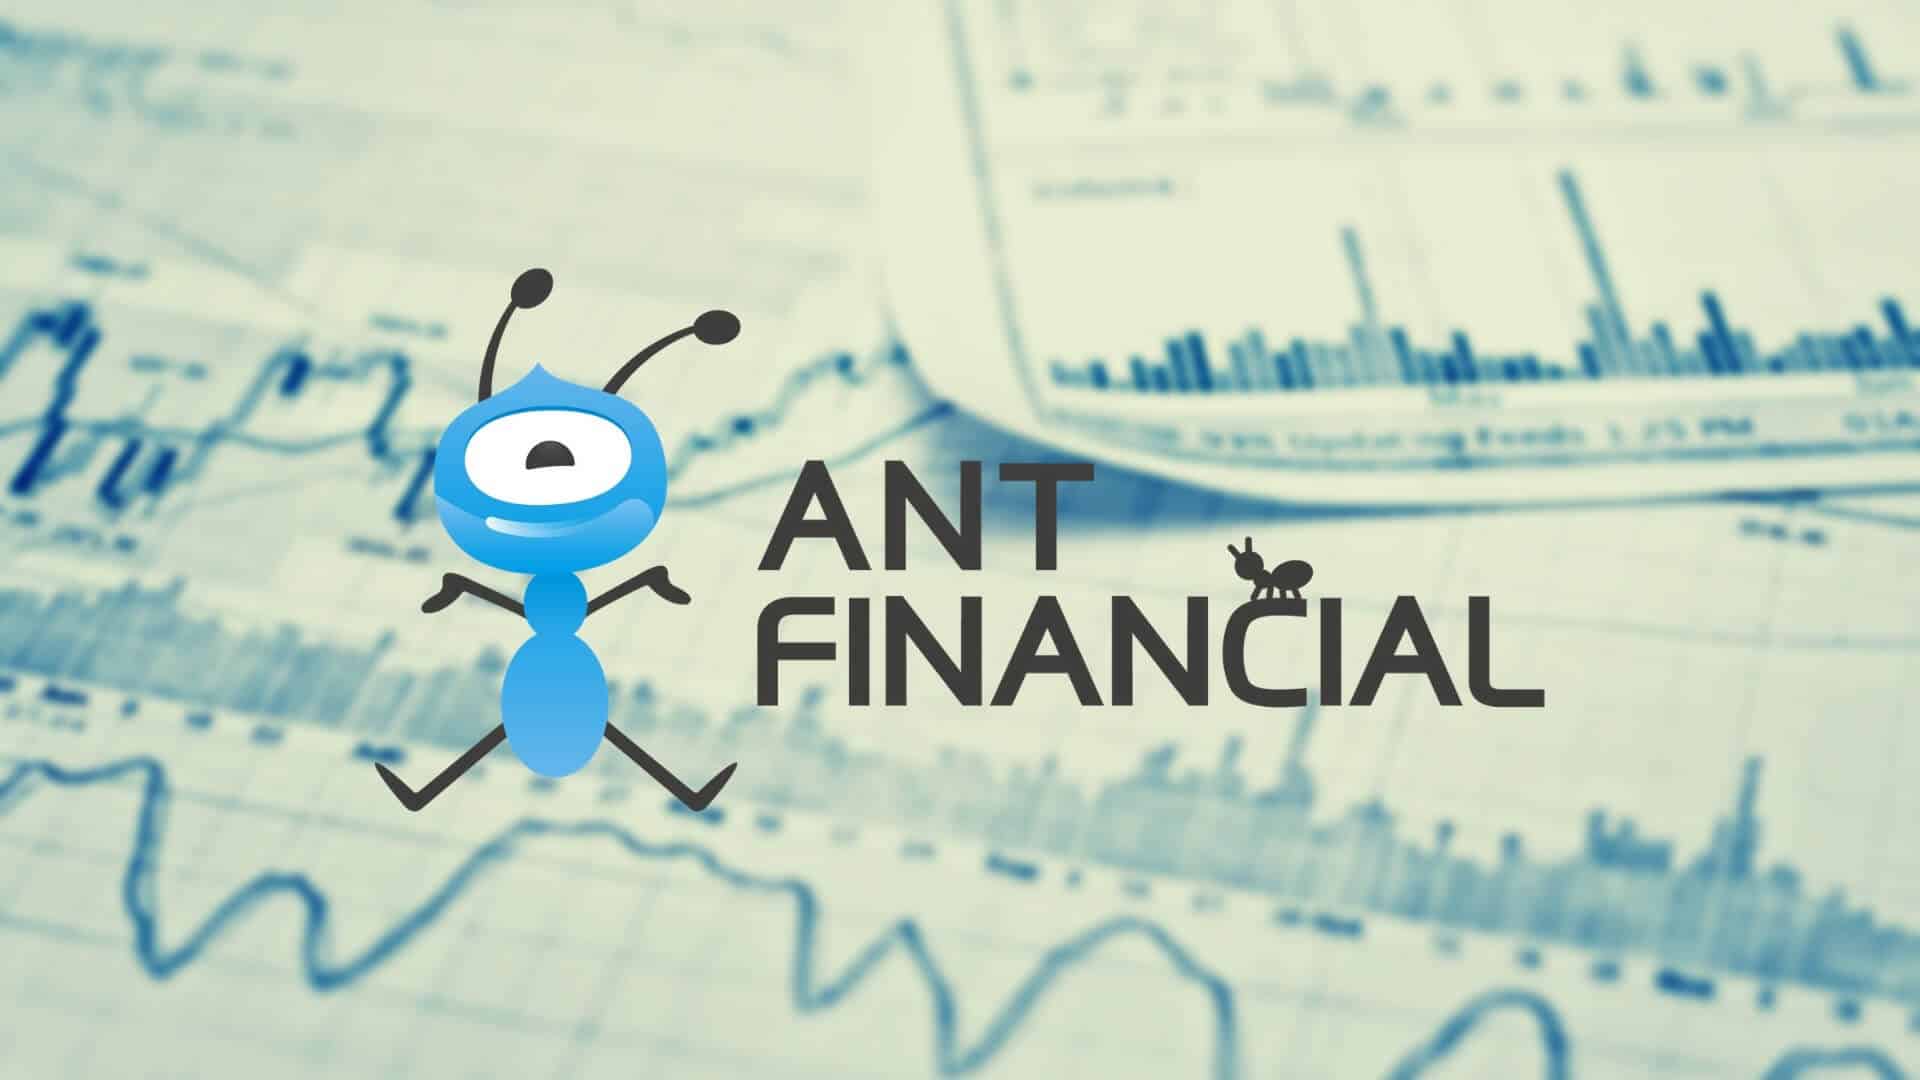 Ant Financial of Alibaba Buys Shares in Vietnam-based eWallet eMonkey